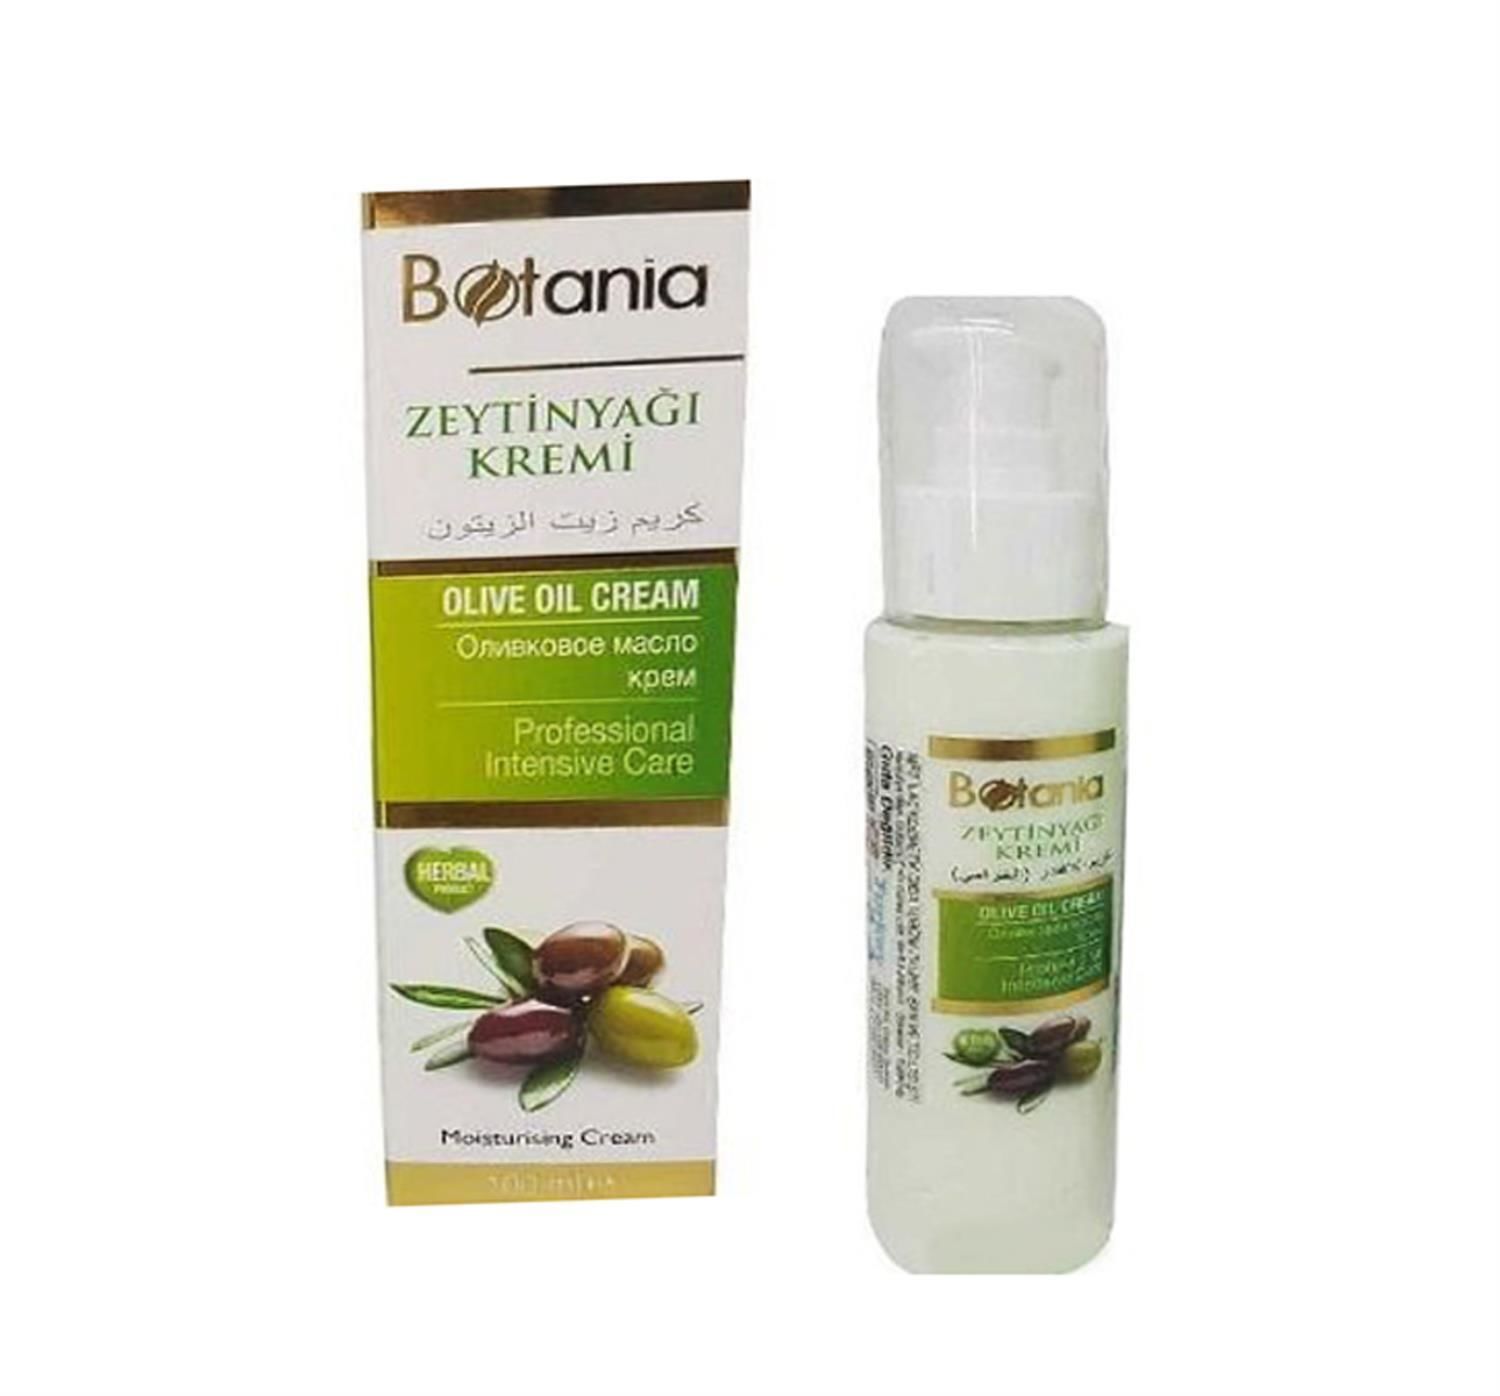 Botania - Olive Oil Cream ( Zeytinyağı Kremi )